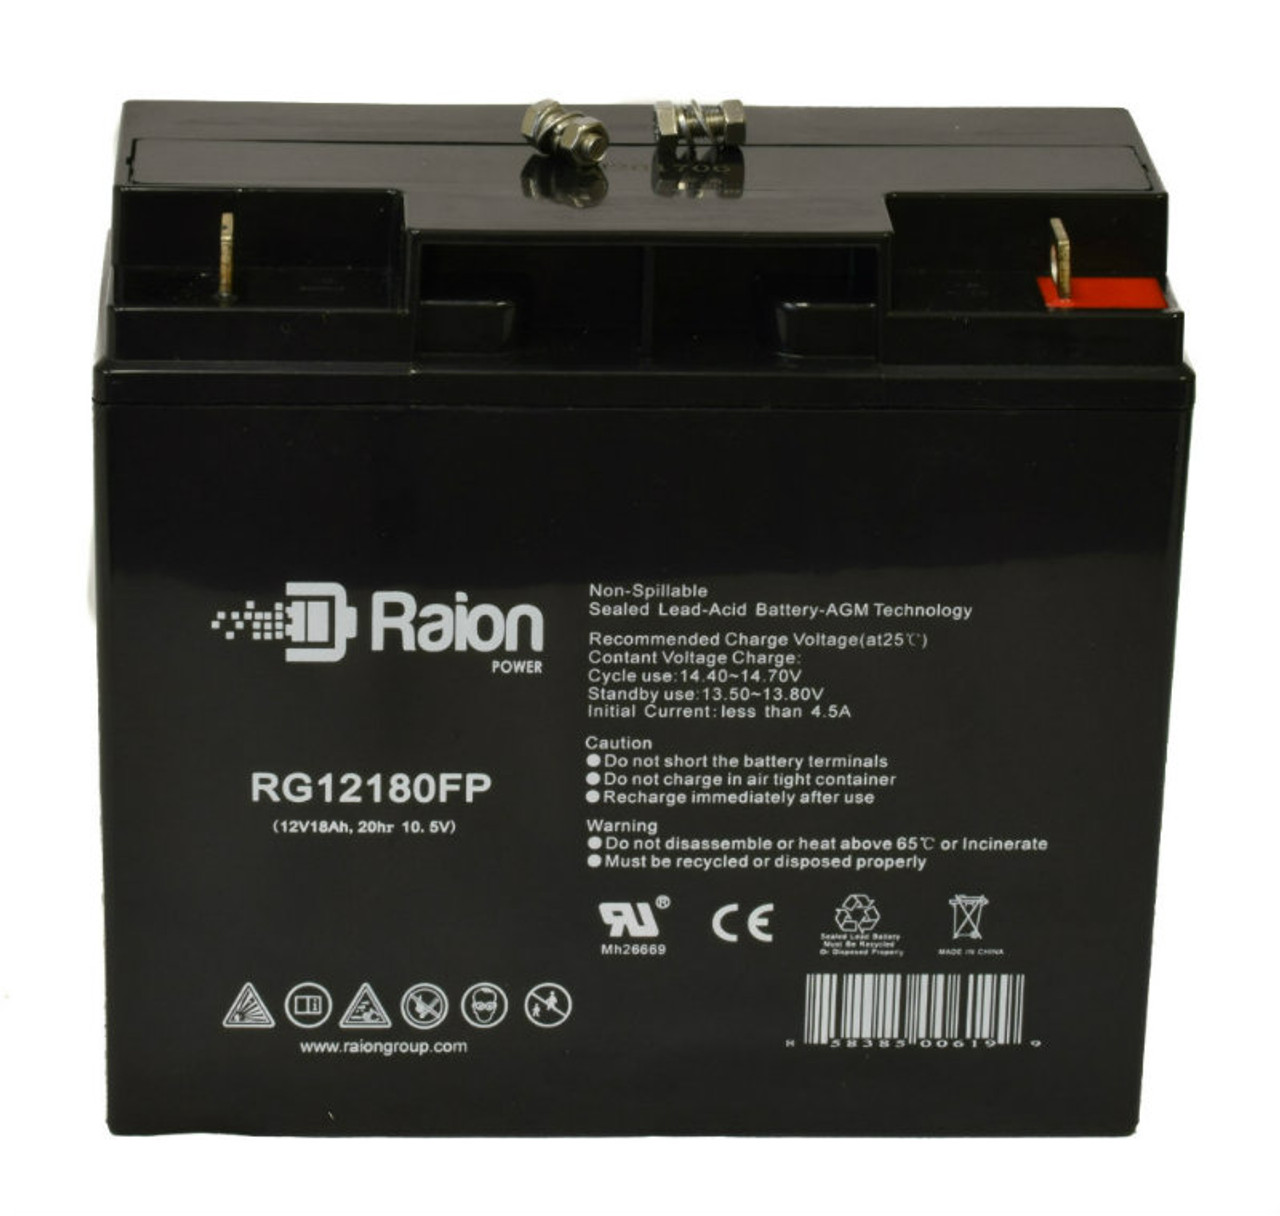 Raion Power RG12180FP 12V 18Ah Lead Acid Battery for EV Rider RiderXpress